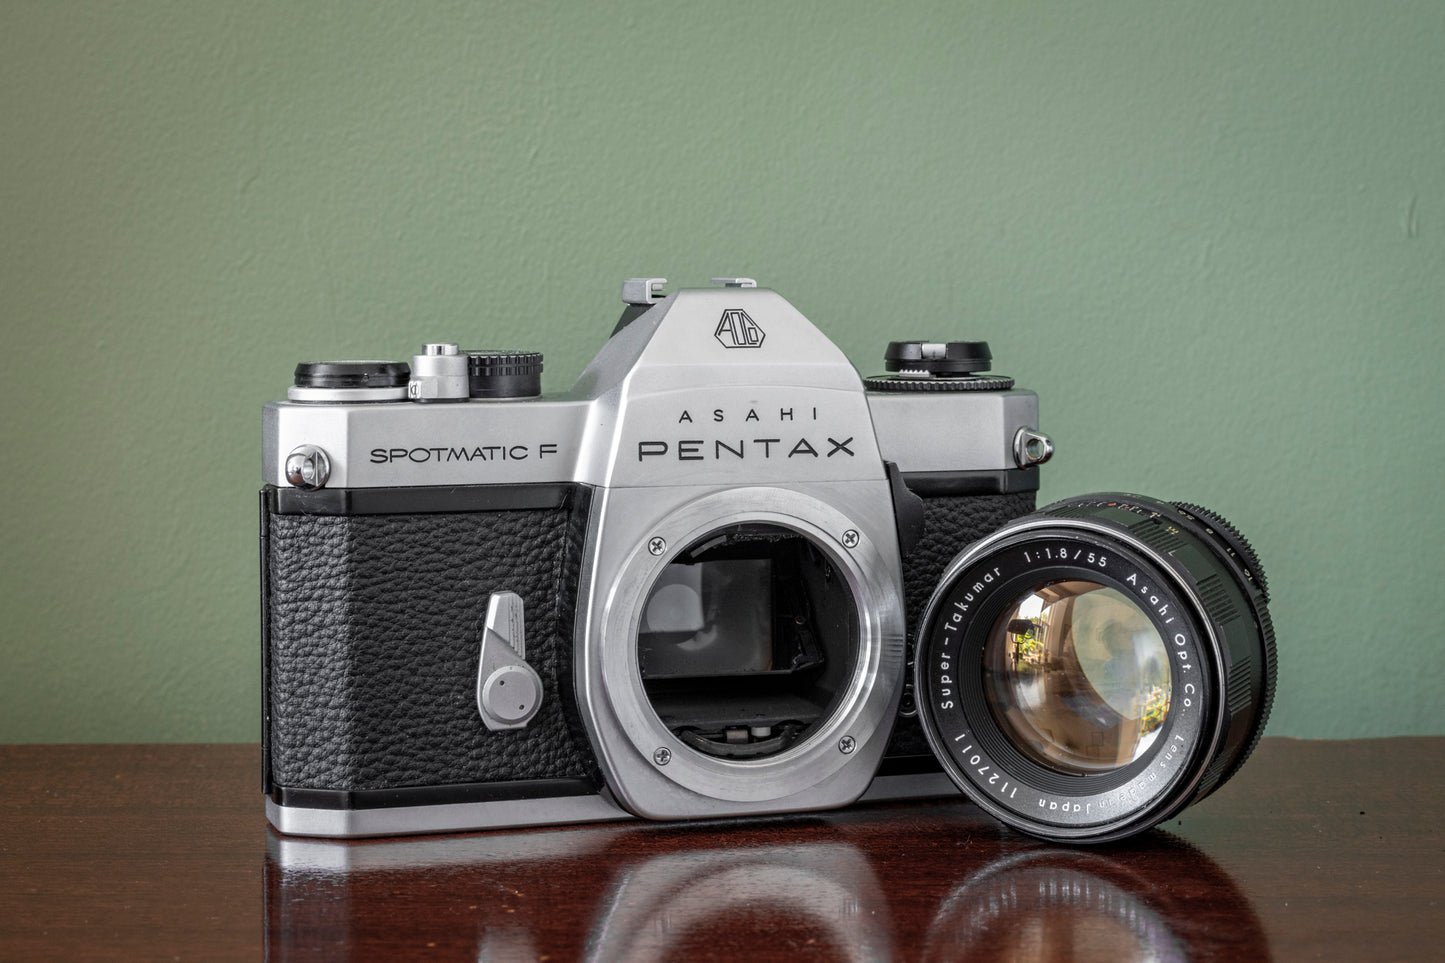 Mint 1960s ASAHI Pentax Spotmatic F 35mm SLR Film Camera + ASAHI 55mm F1.8 Super Takumar Lens